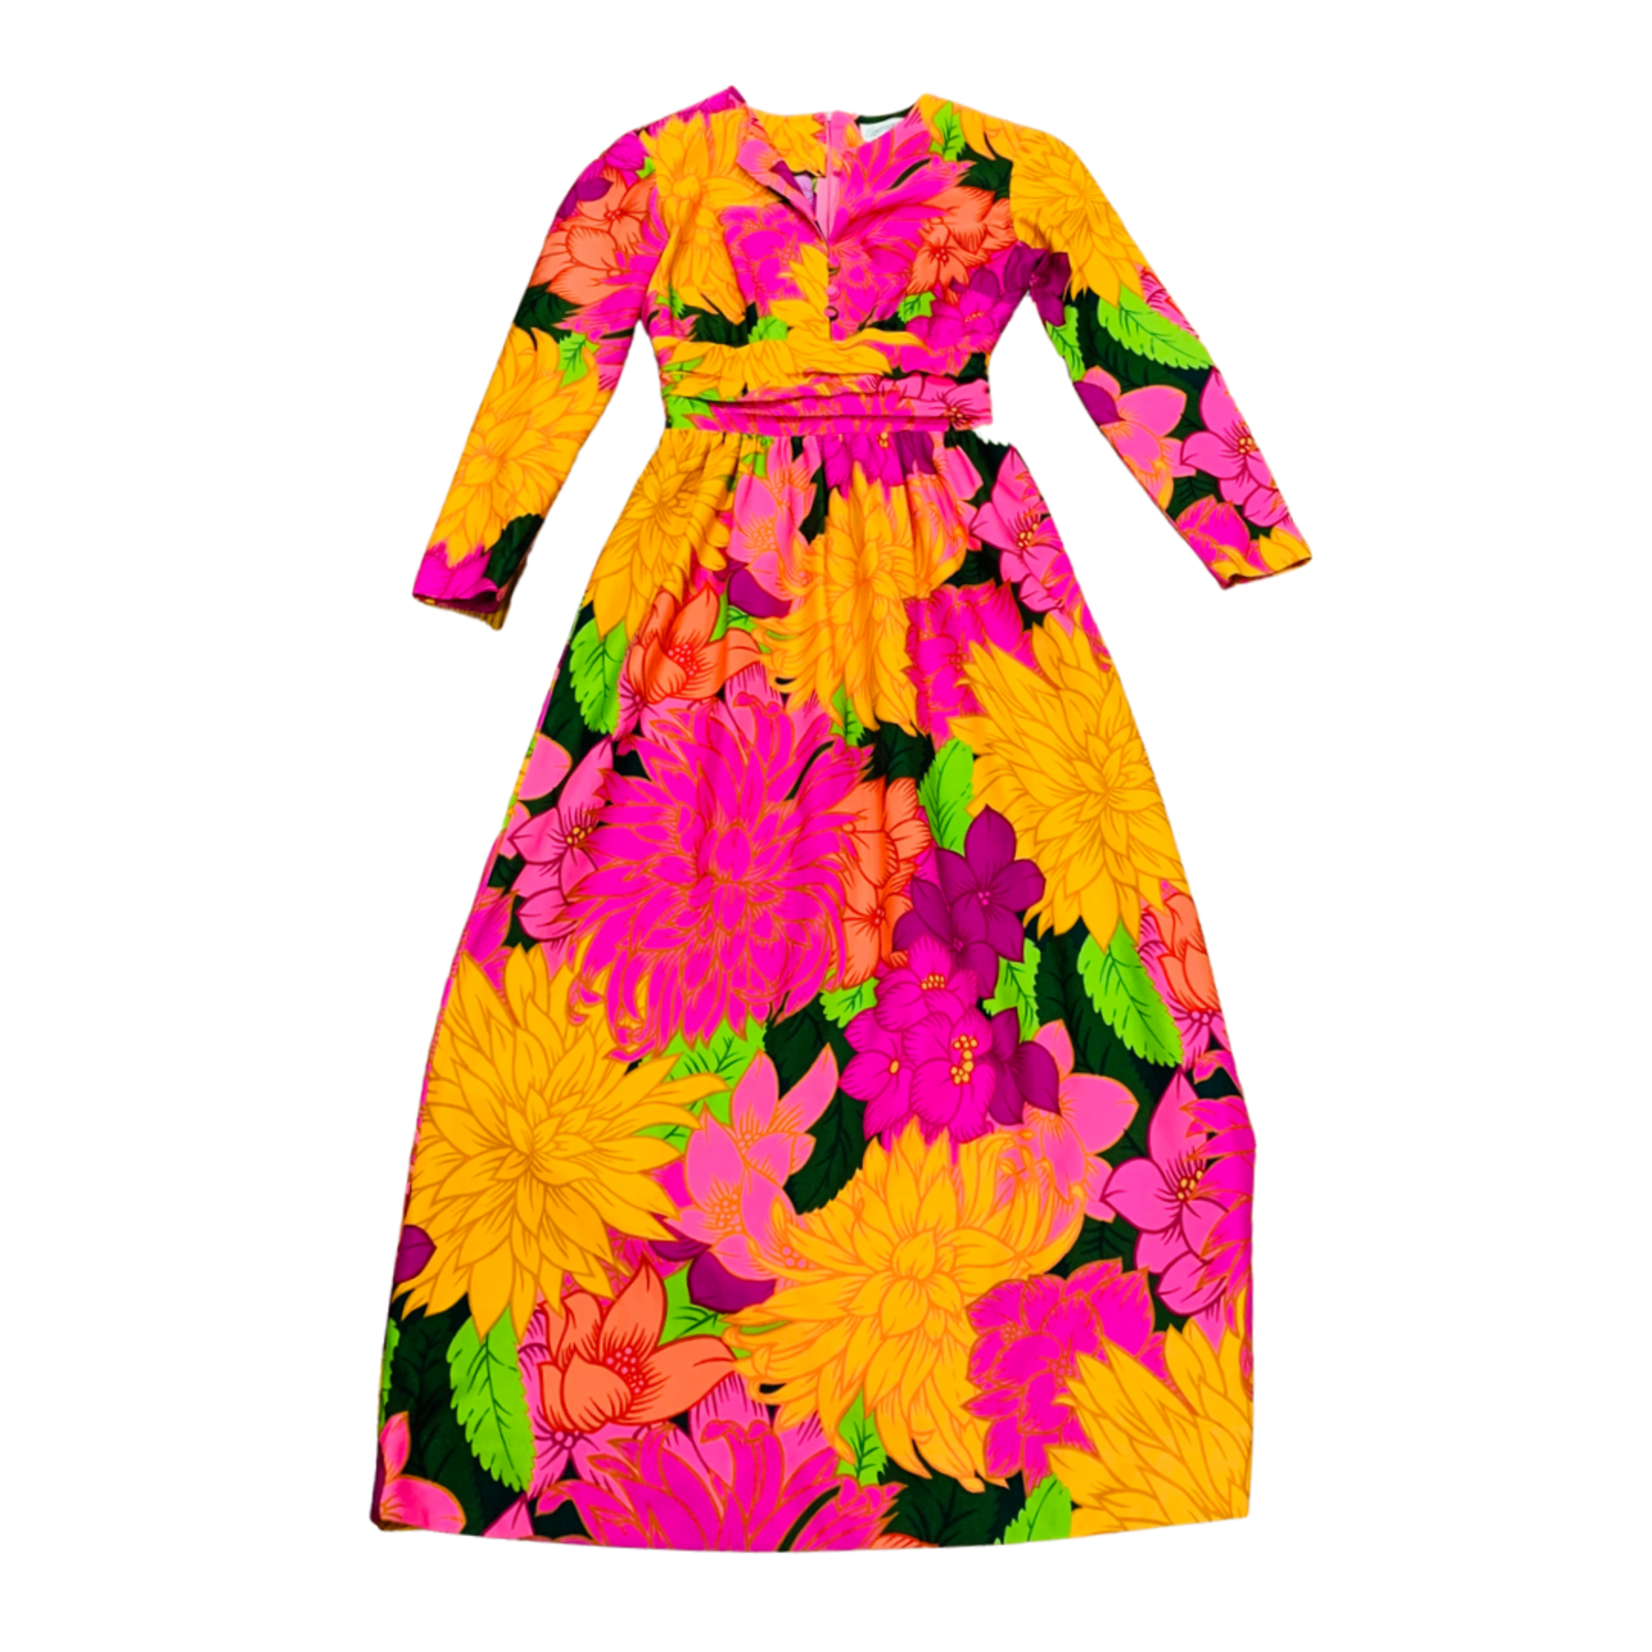 Mission Zero Women's Vintage Dress - Sydney Designs Honolulu Bright Pink Orange Small